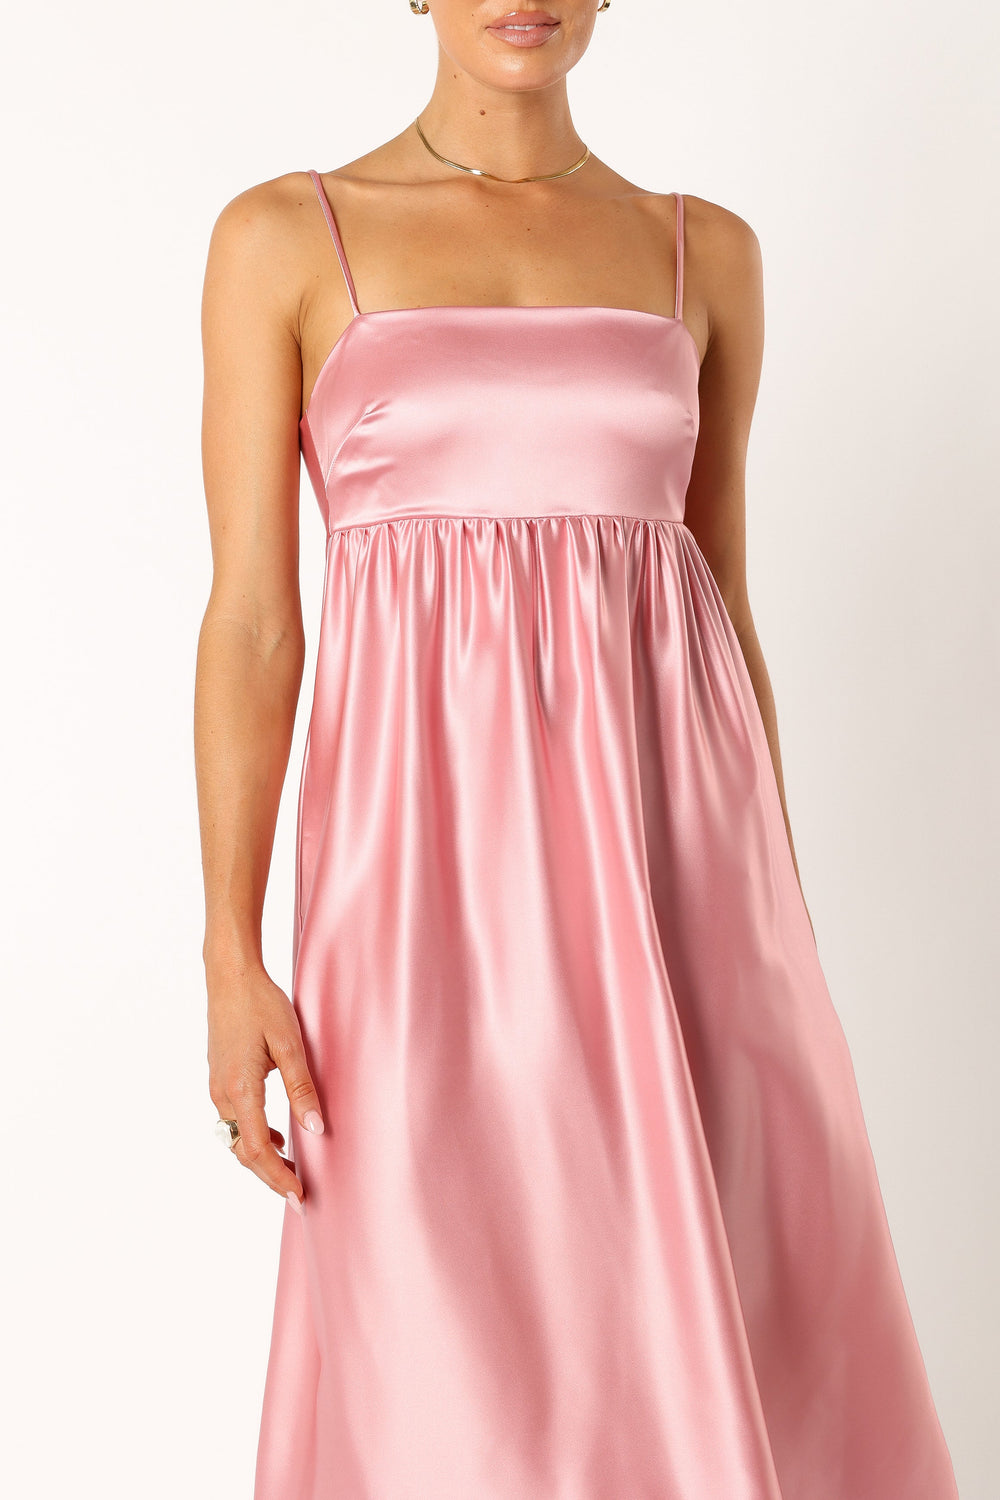 DRESSES @Teagan Bow Back Midi Dress - Soft Pink